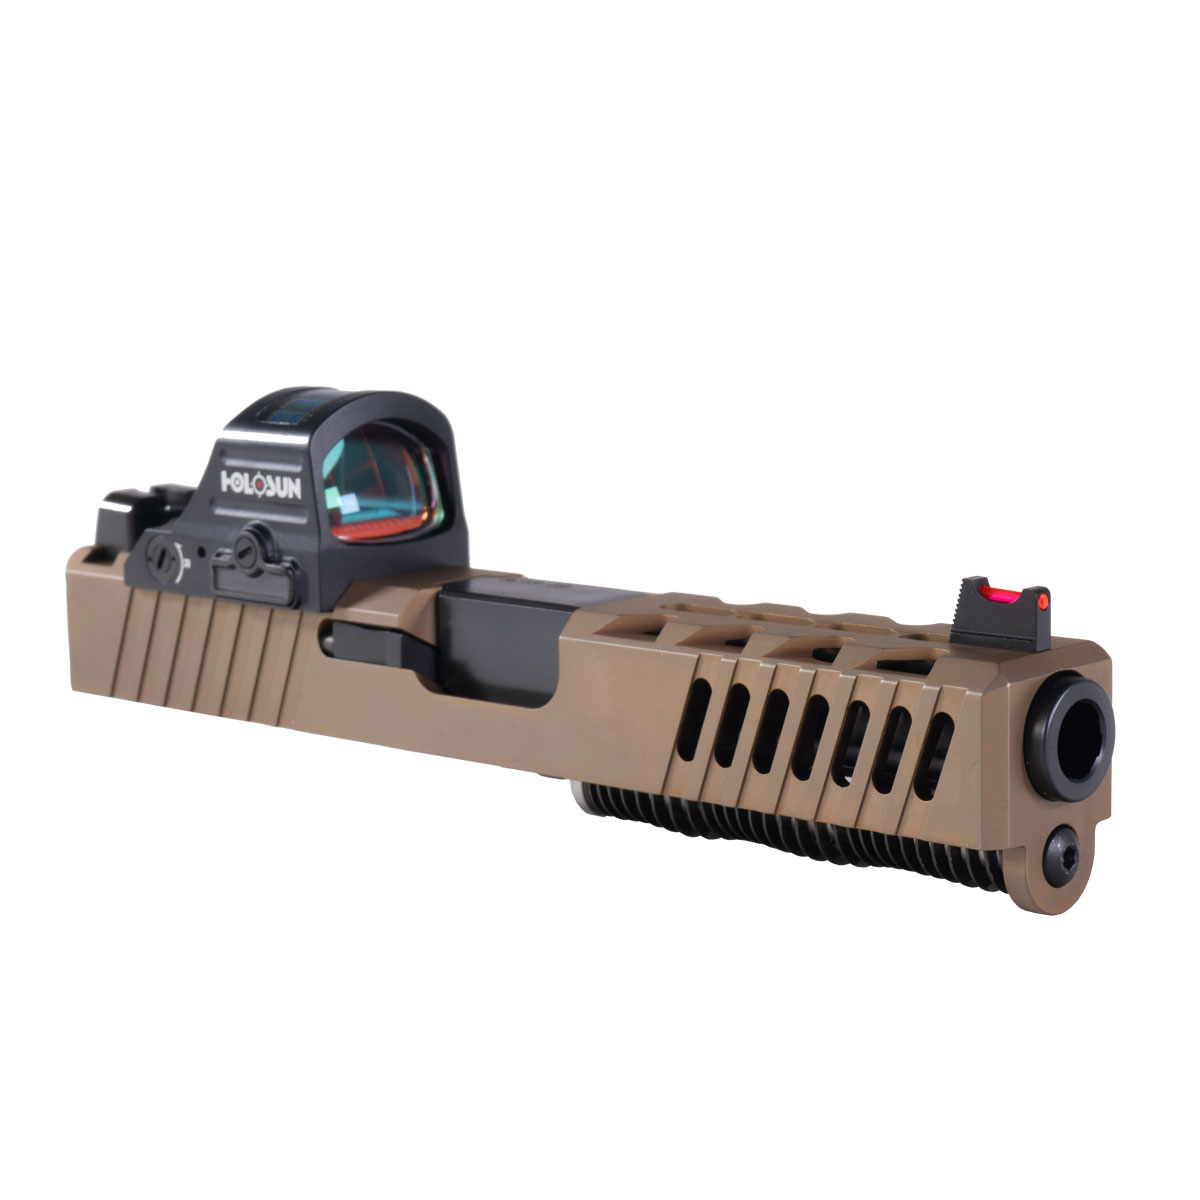 DTT 'Copperhead' 9mm Complete Slide Kit - Glock 19 Compatible